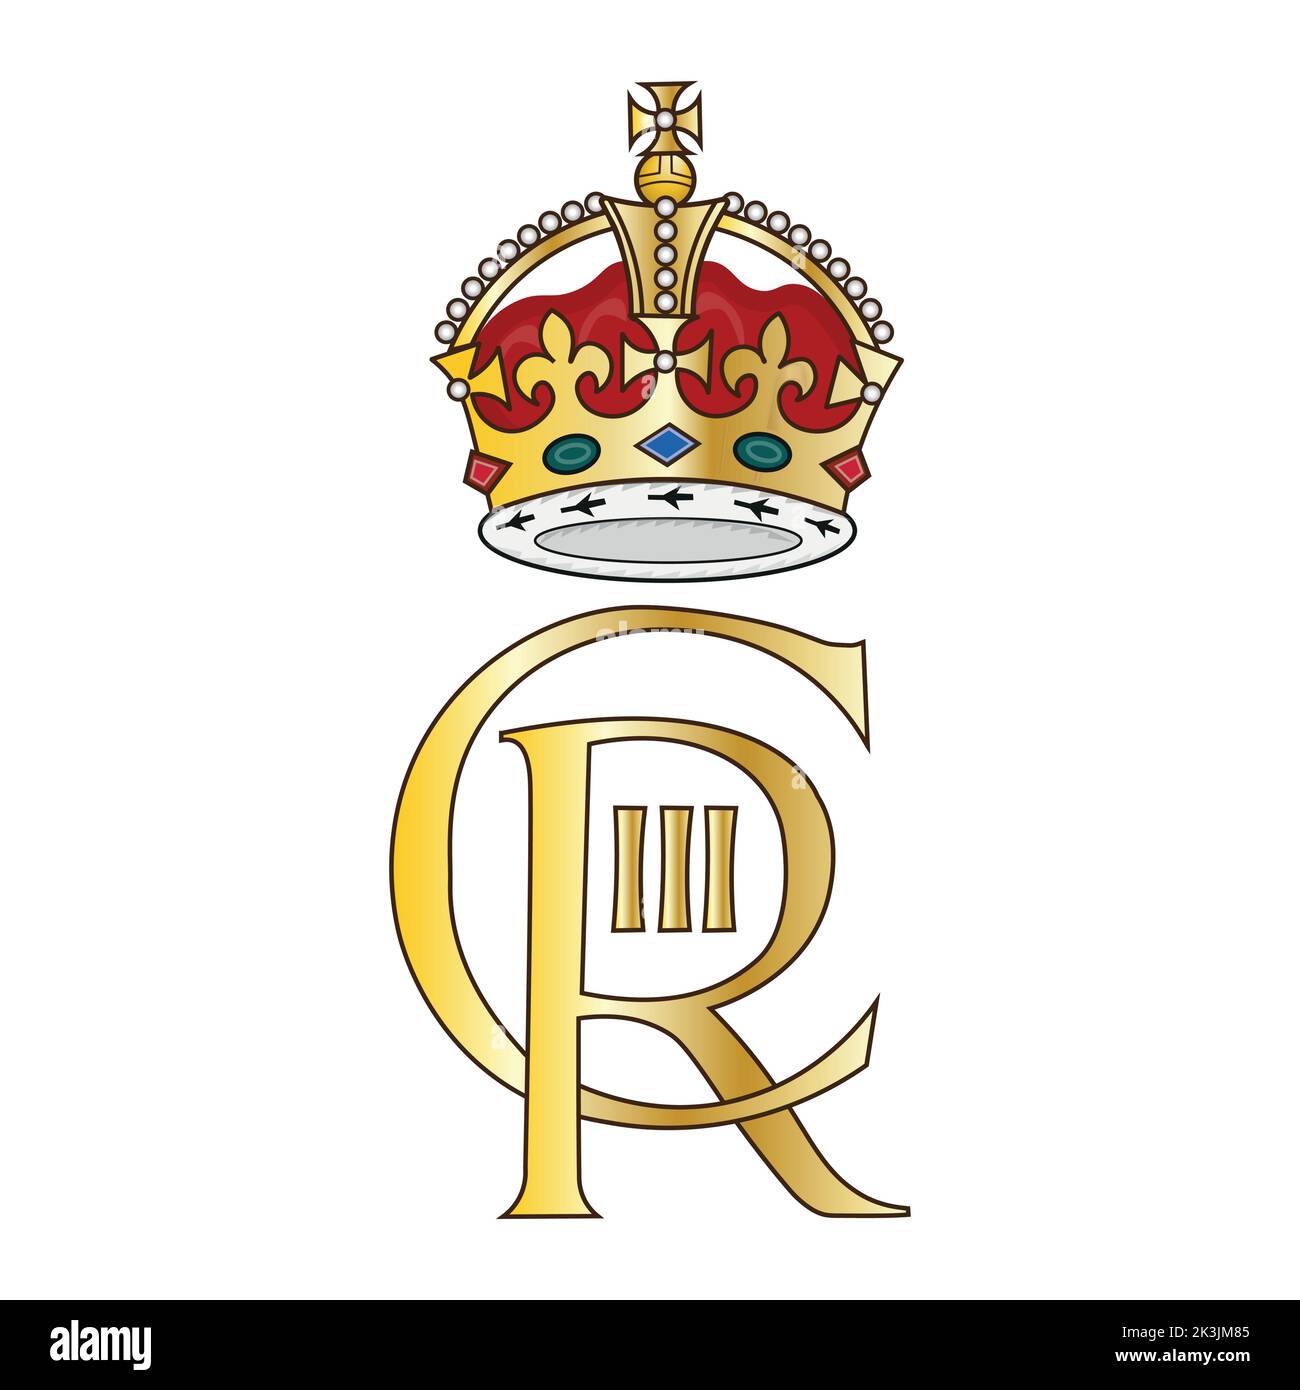 King Charles III 2022 Royal Cypher vector illustration Stock Vector